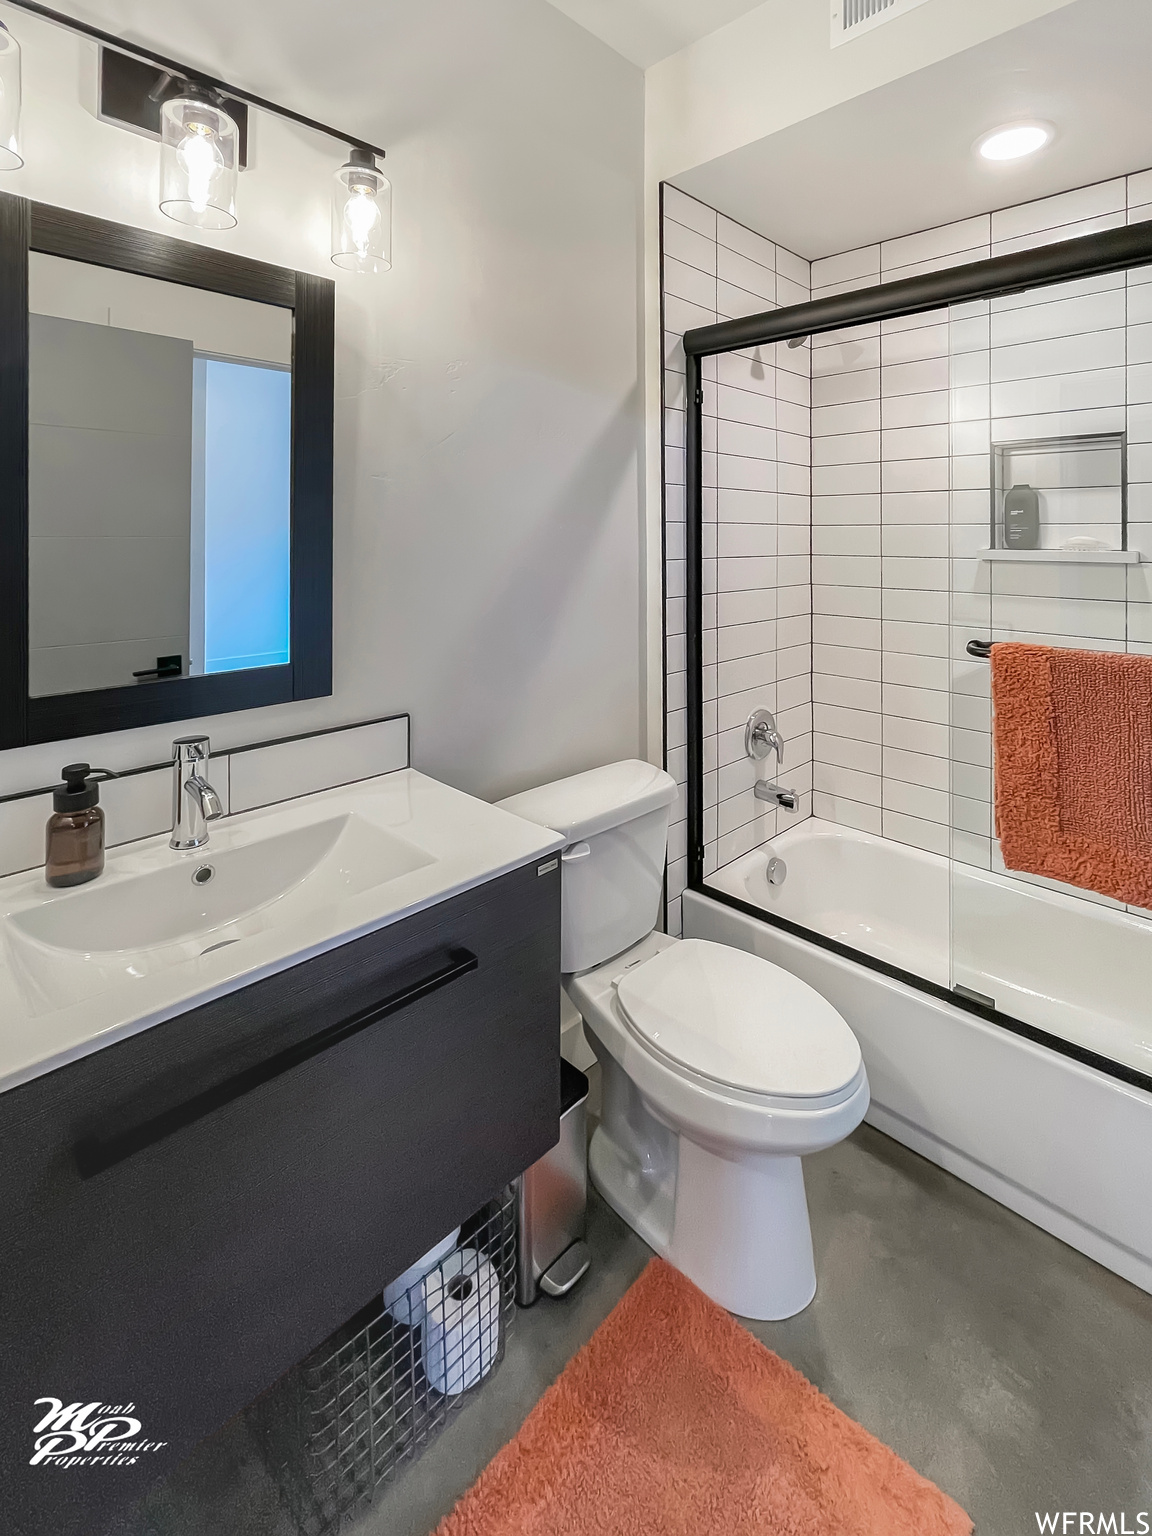 Full bathroom featuring vanity, bath / shower combo with glass door, concrete floors, and mirror